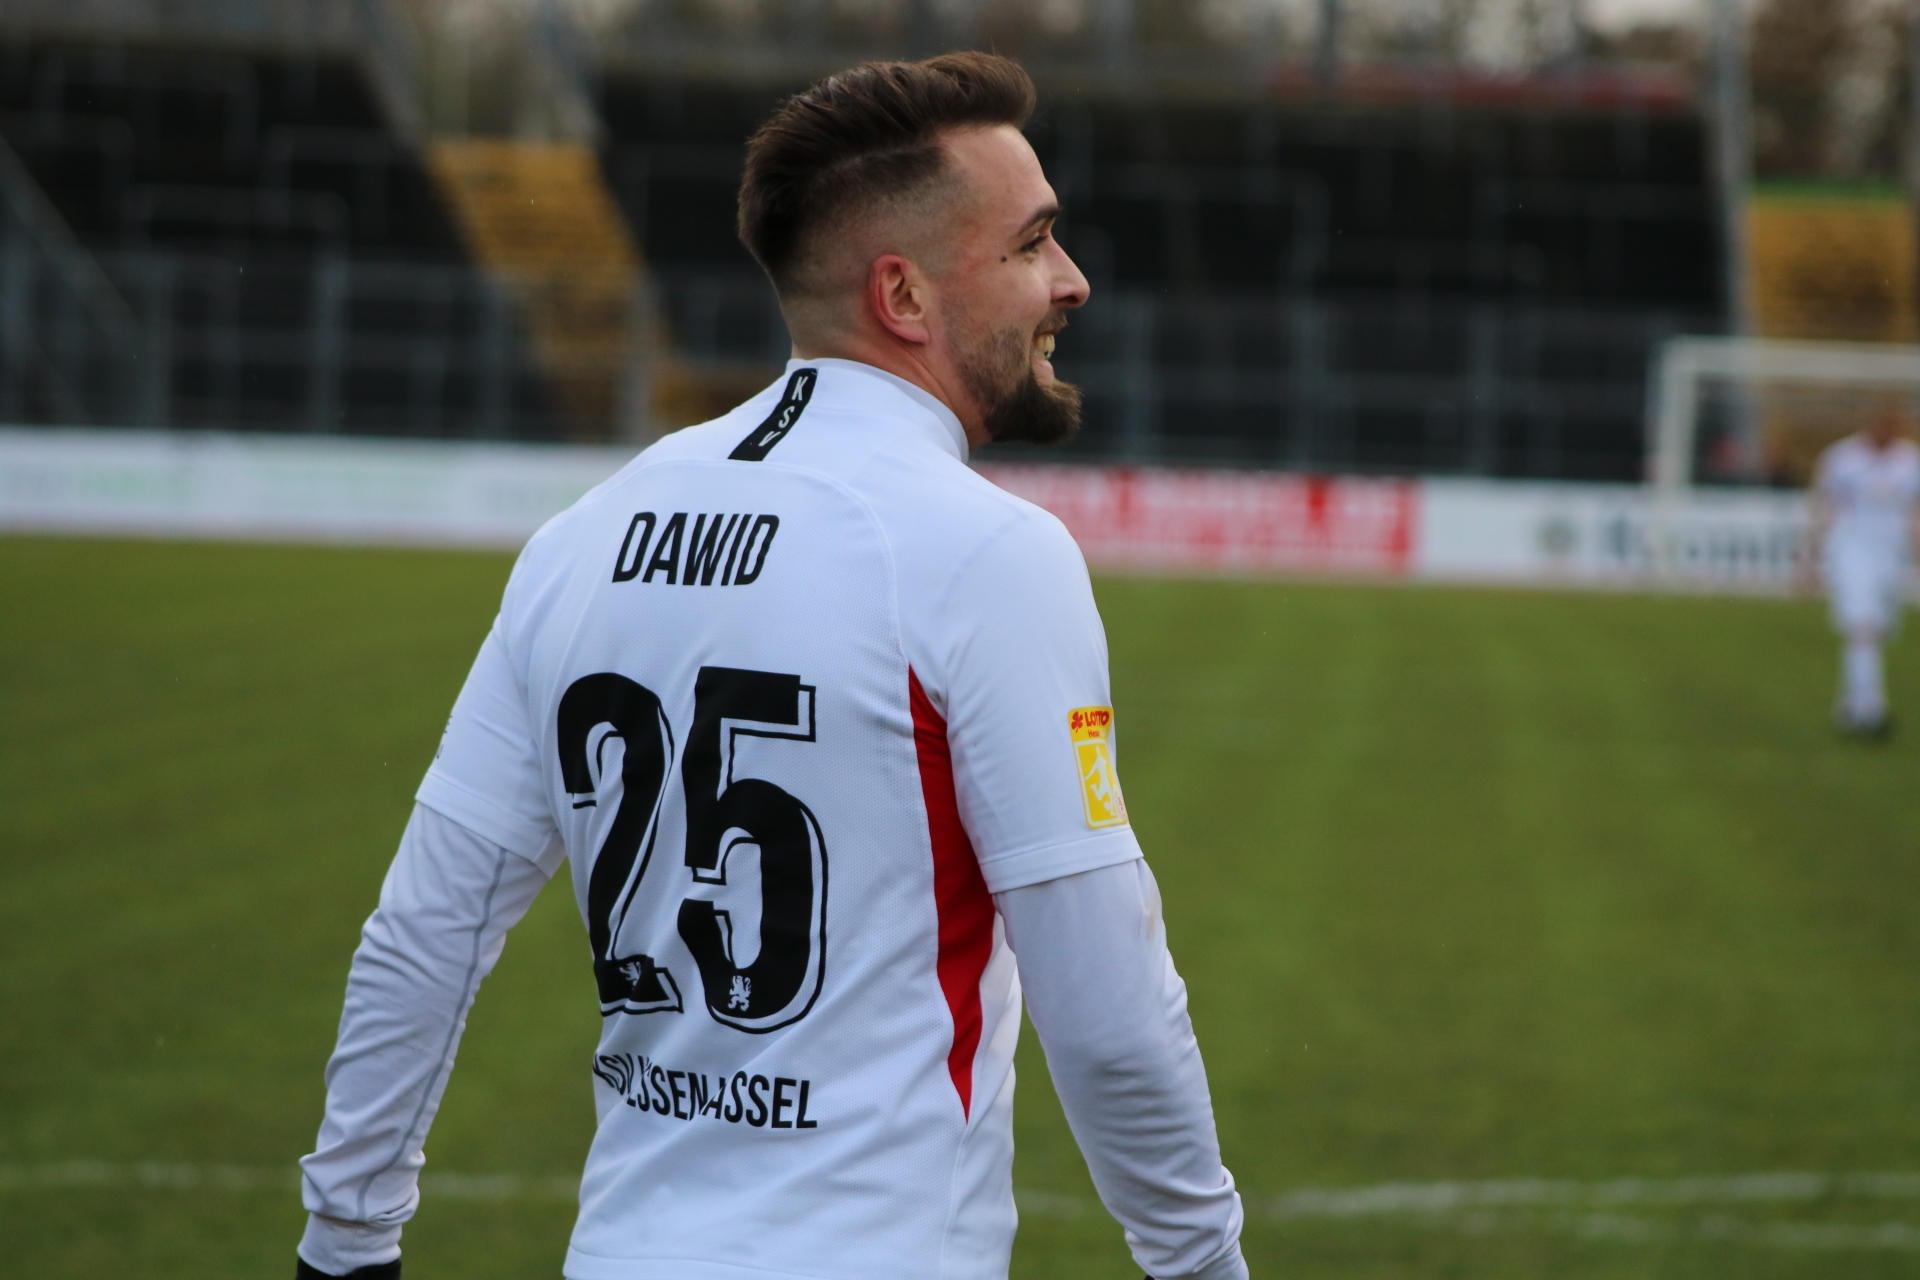 Lotto Hessenliga 2019/2020, KSV Hessen Kassel, FV Bad Vilbel, Endstand 6:1, Marco Dawid (KSV Hessen Kassel)